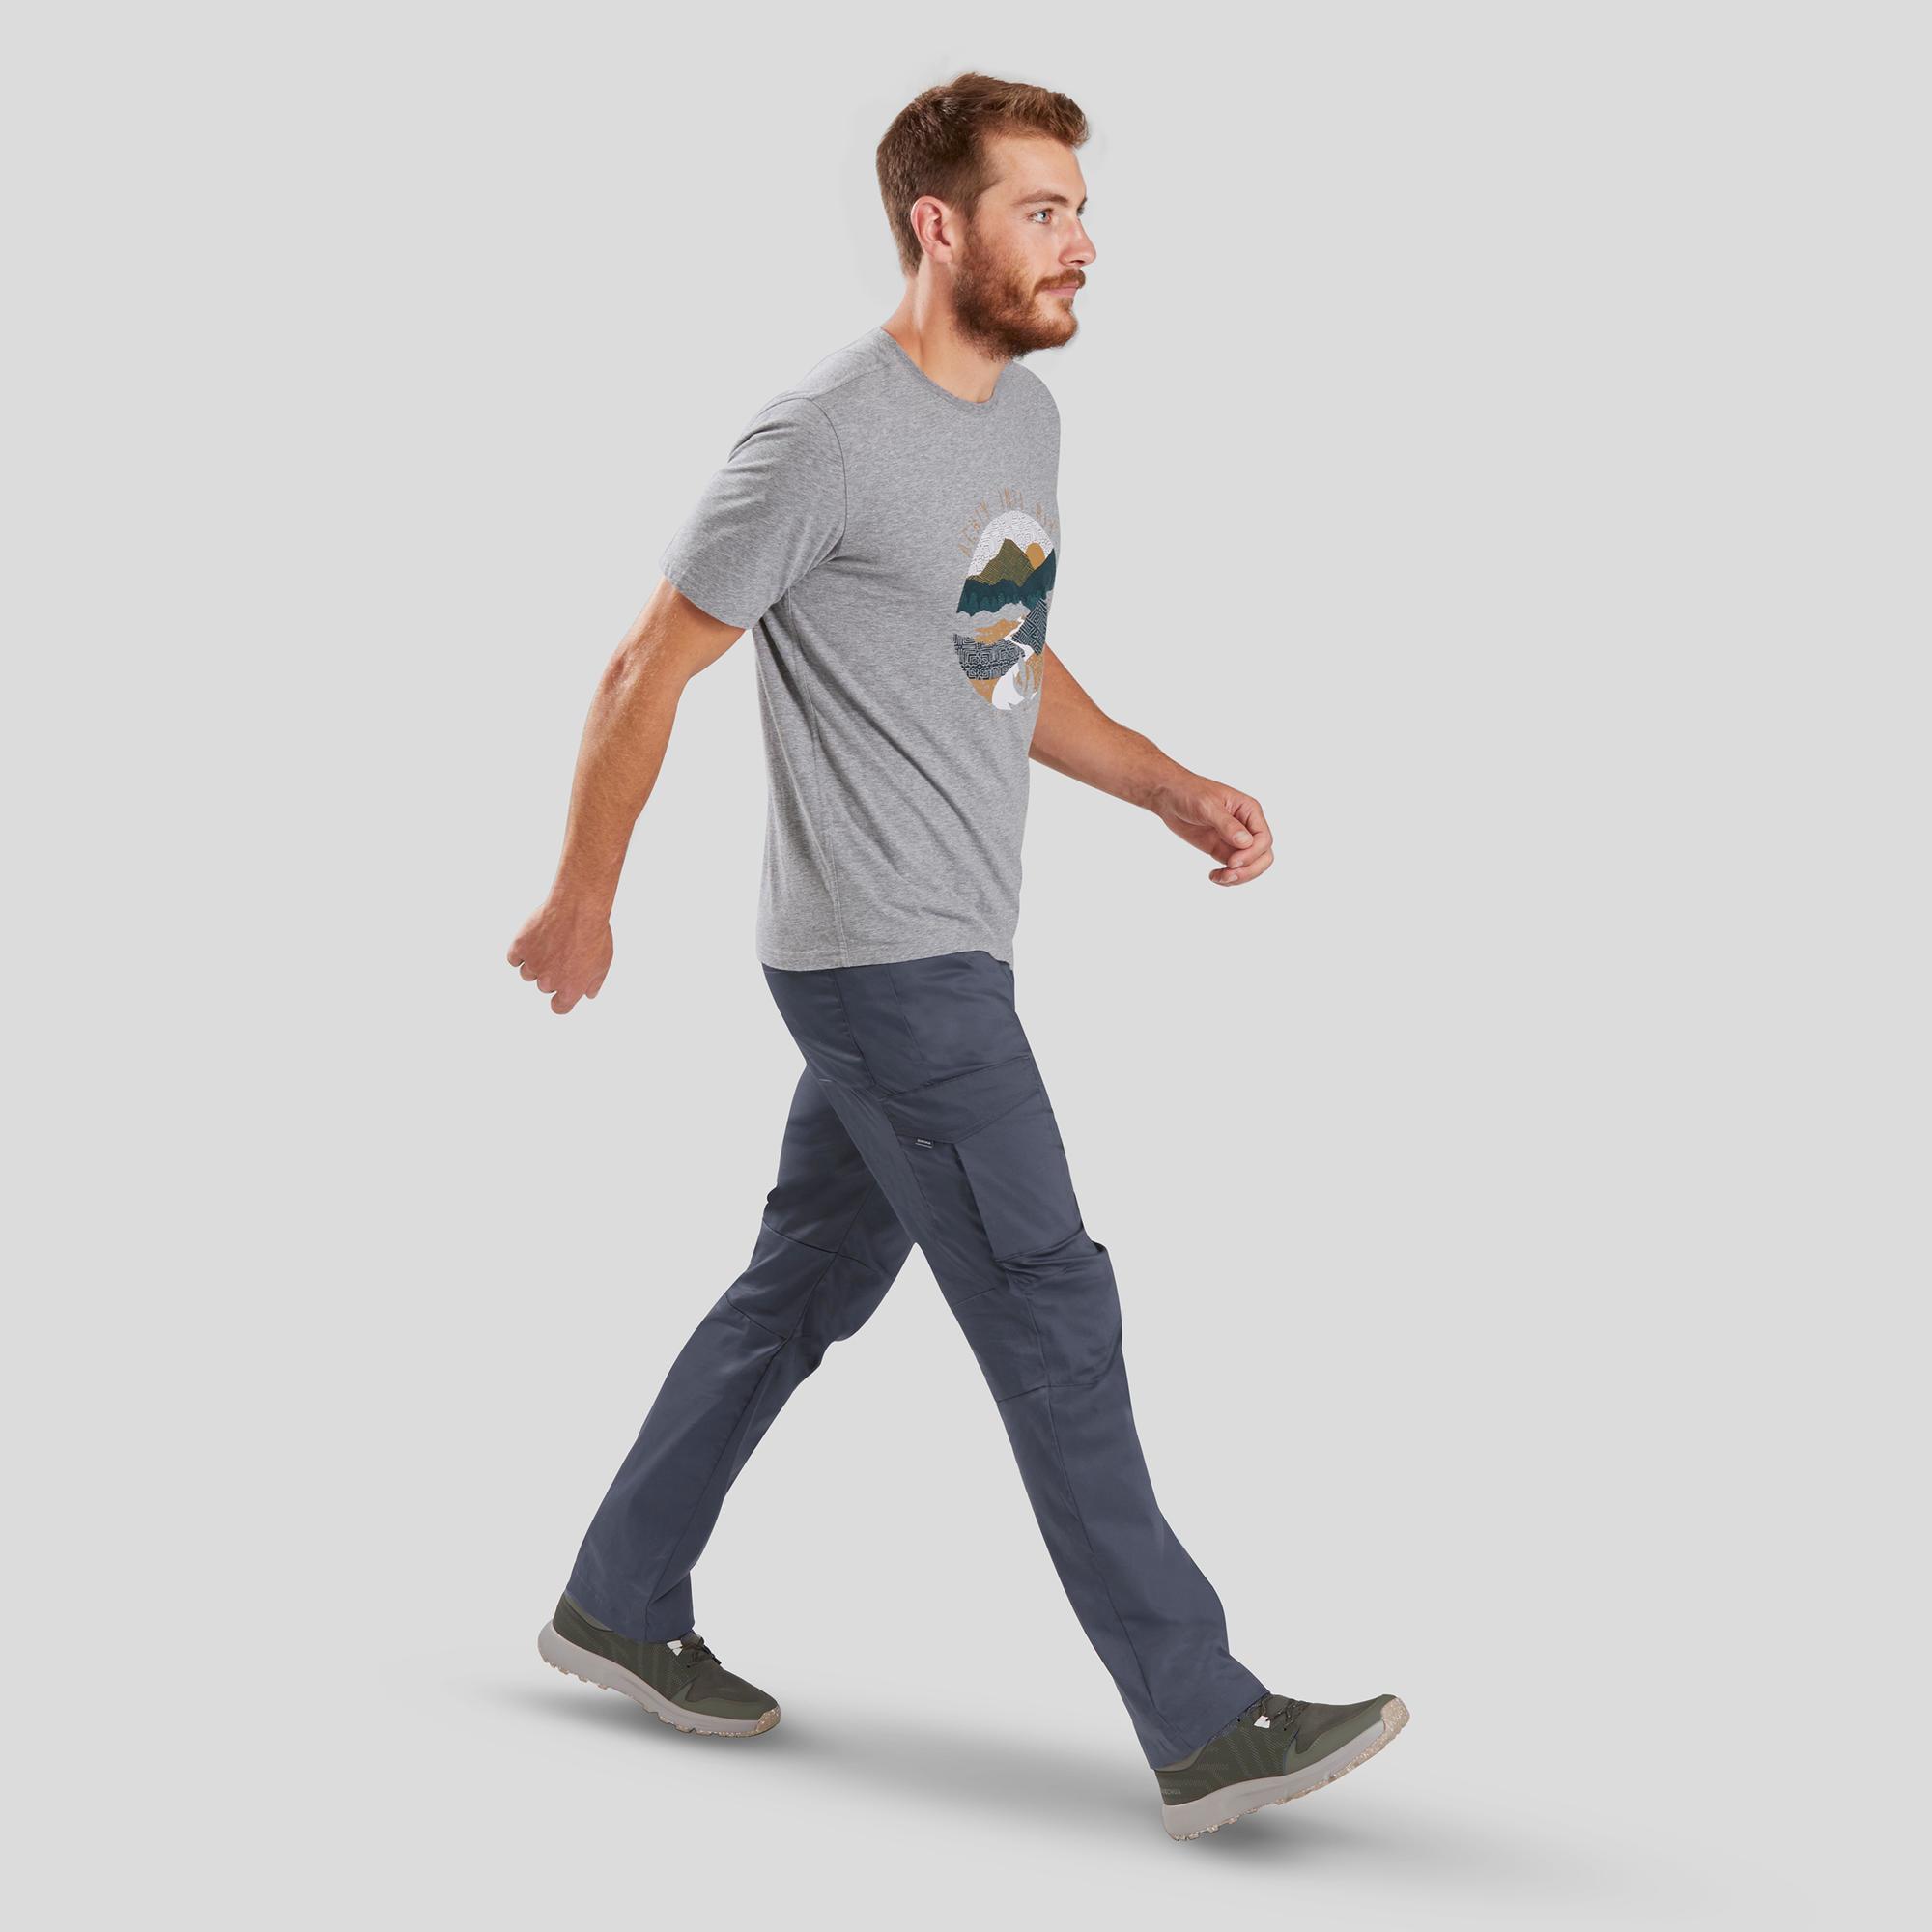 mens walking trousers decathlon